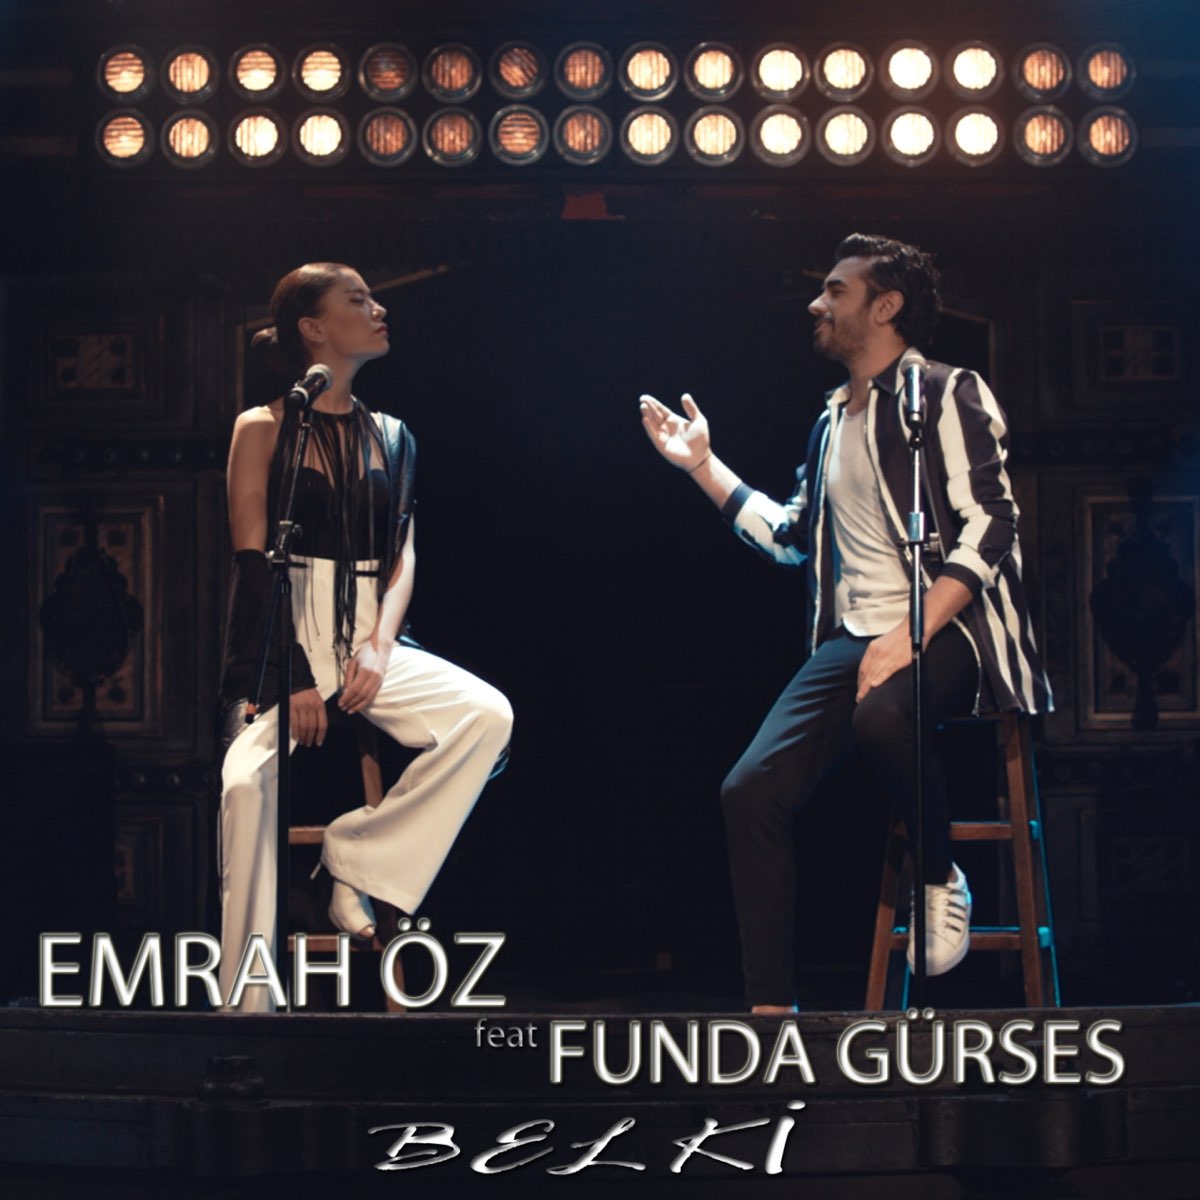 Belki (feat. Funda Gürses) - Single par Emrah Öz sur Apple Music